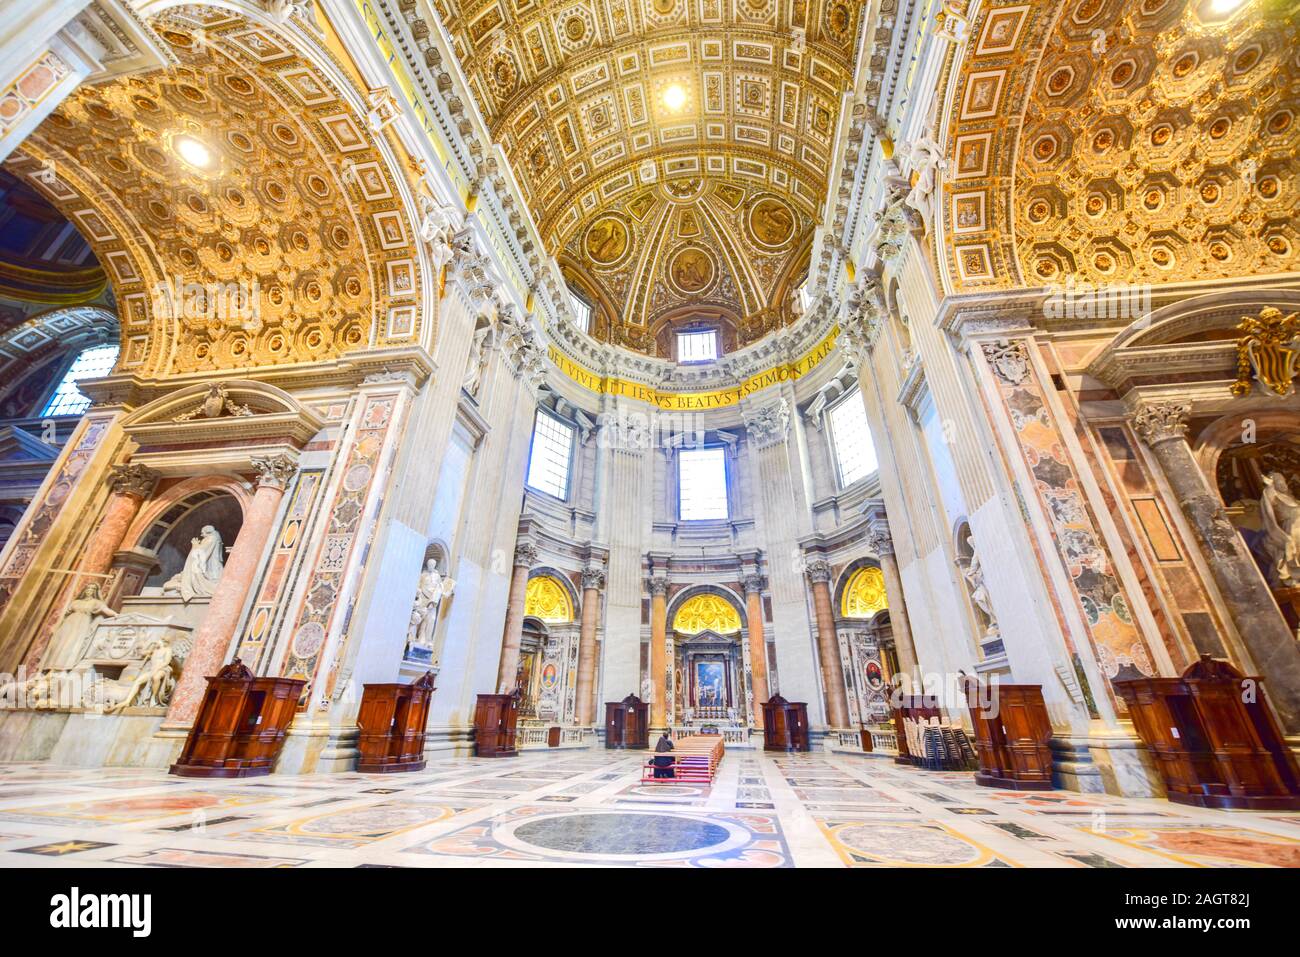 Italian Renaissance Architecture of St. Peter's Basilica in Vatican City Stock Photo